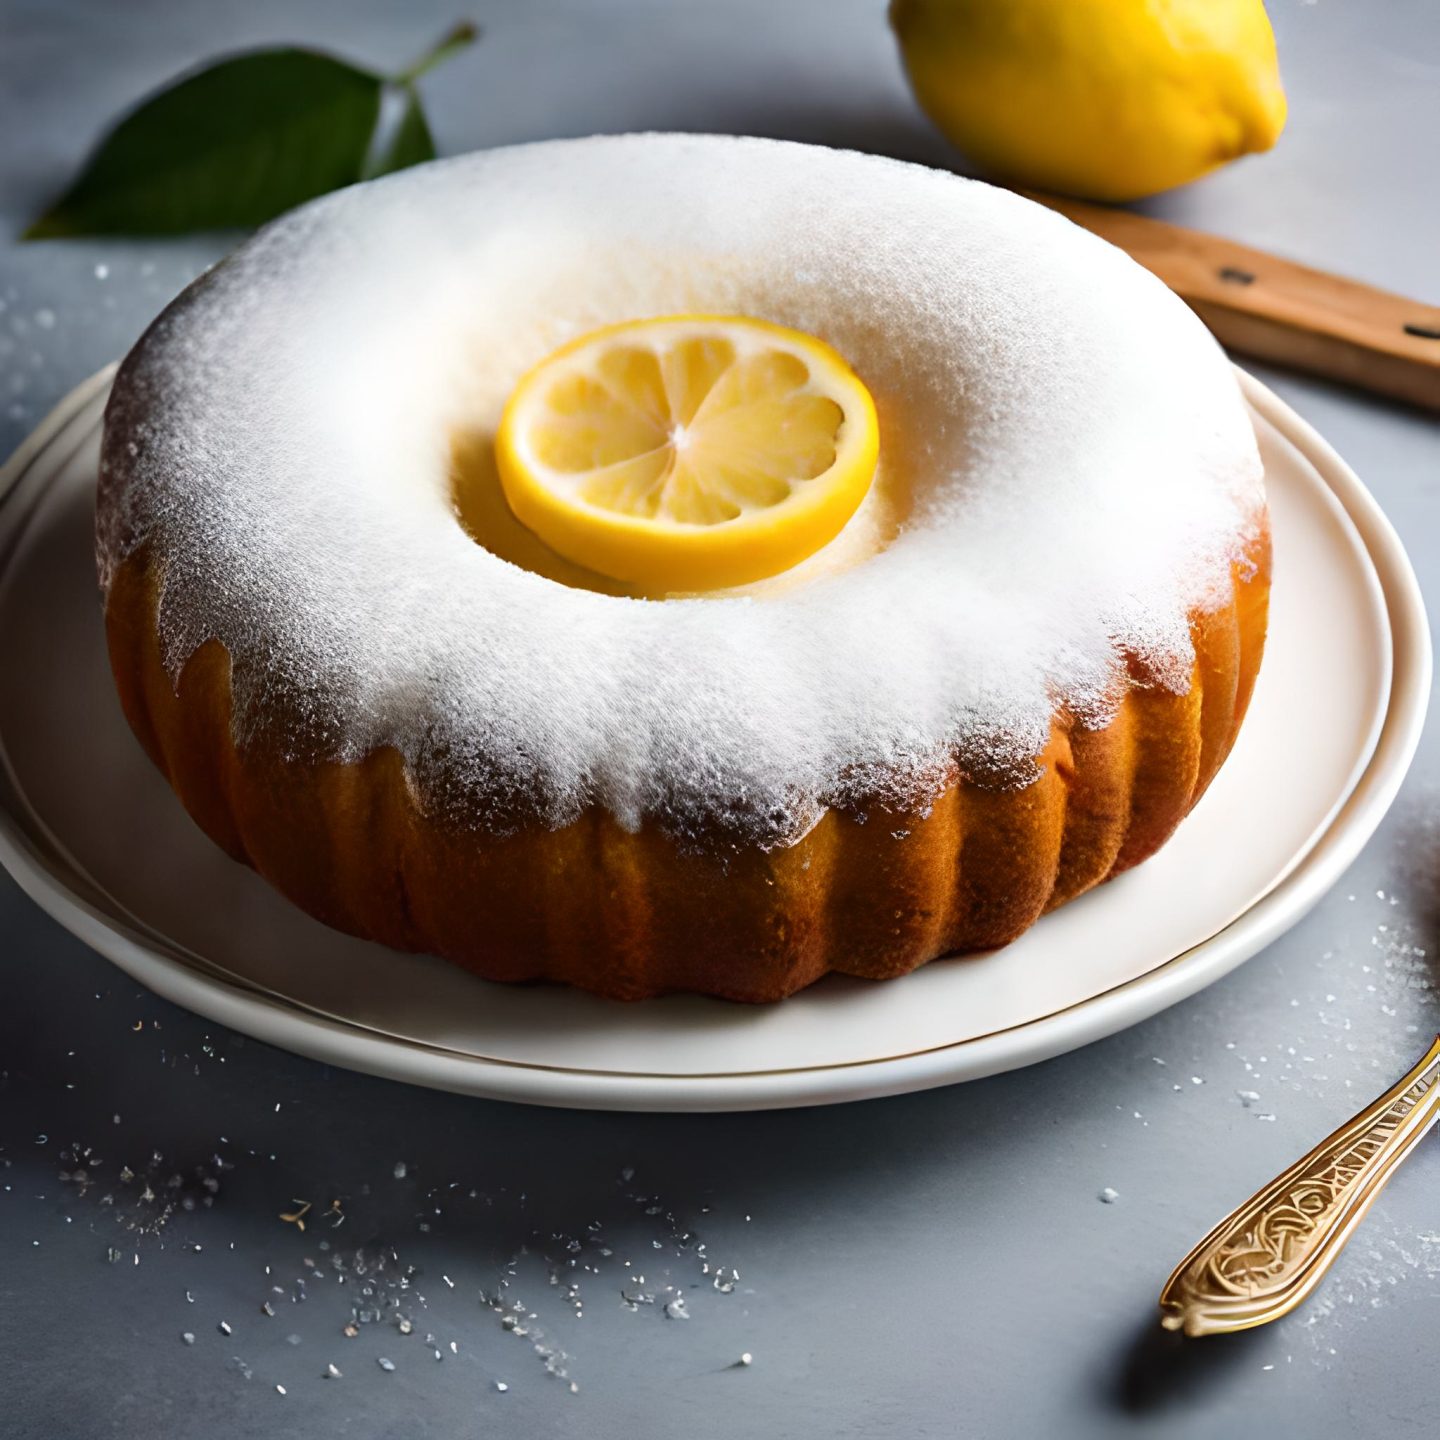 Lemon cake, Homemade lemon cake, Lemon pound cake, Moist lemon cake, Lemon dessert, Lemon glaze, Tangy lemon cake, Fresh lemon flavor, Citrus cake, Lemon bundt cake, Best lemon cake, Lemon cake recipe, Easy lemon cake, Lemon loaf cake, Simple lemon cake, Lemon sheet cake, Lemon drizzle cake, Fluffy lemon cake, Lemon yogurt cake, Classic lemon cake,